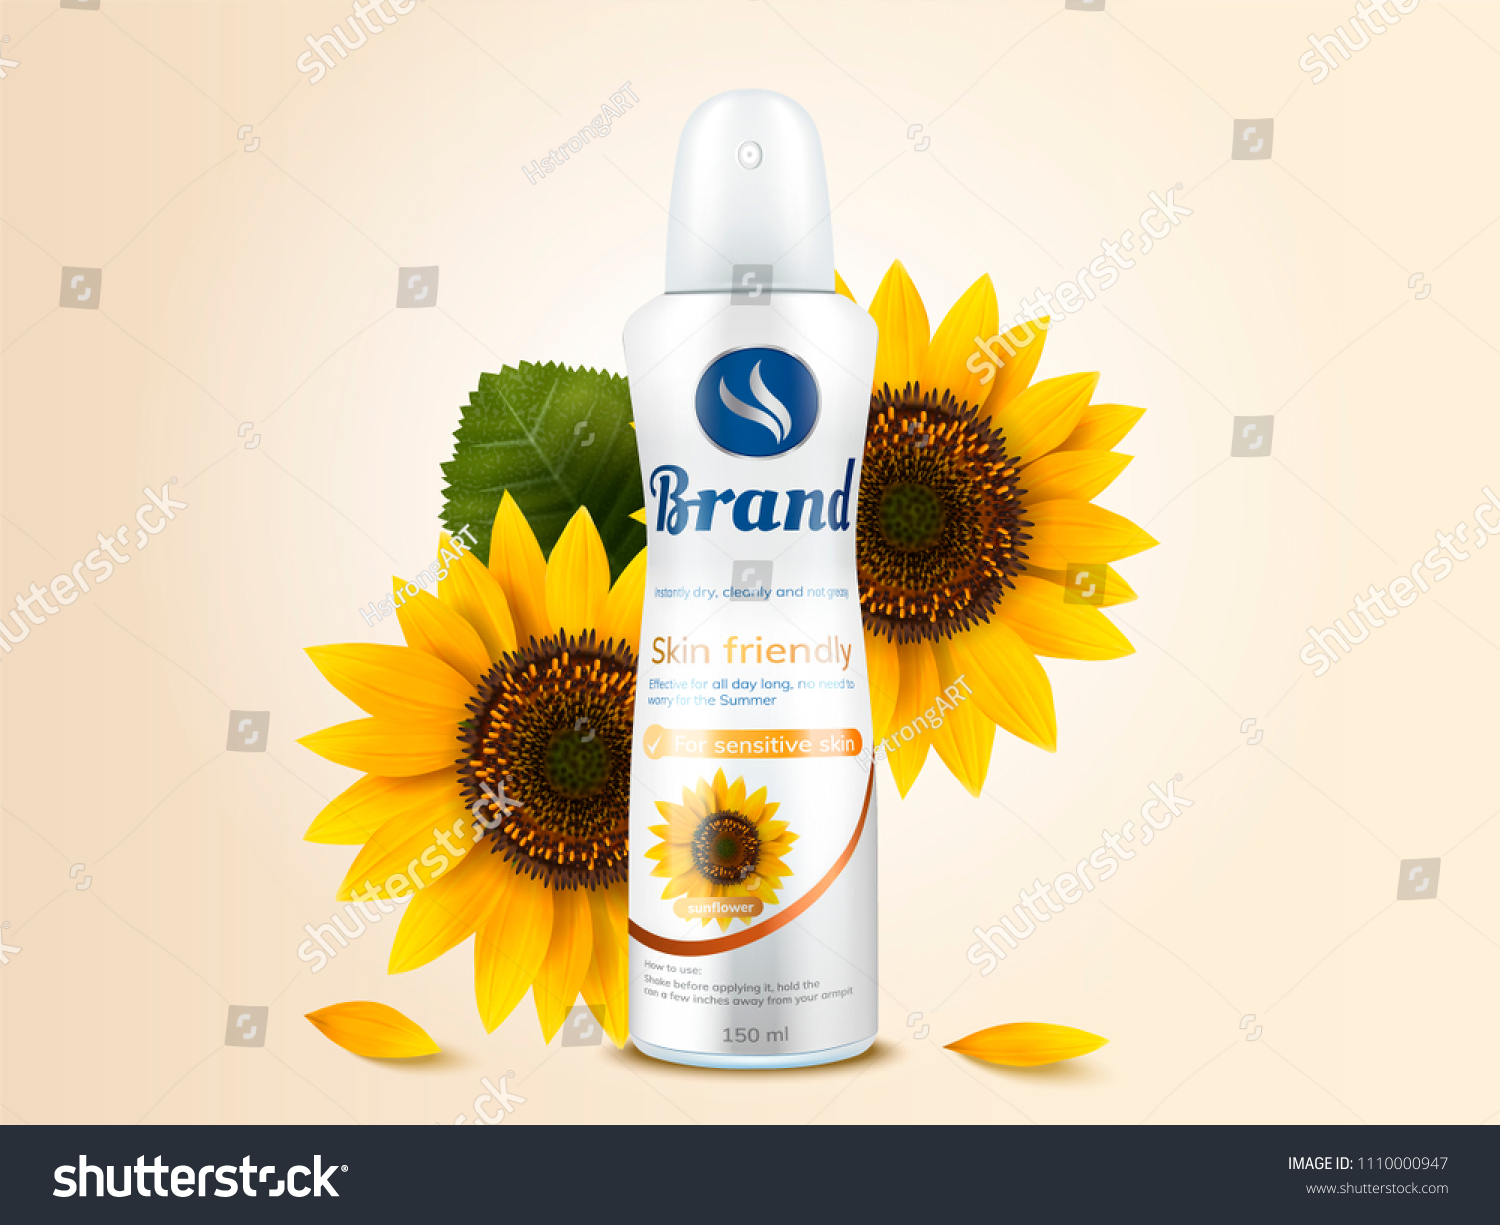 SVG of Deodorant spray bottle package design with sunflower fragrance in 3d illustration for design uses svg